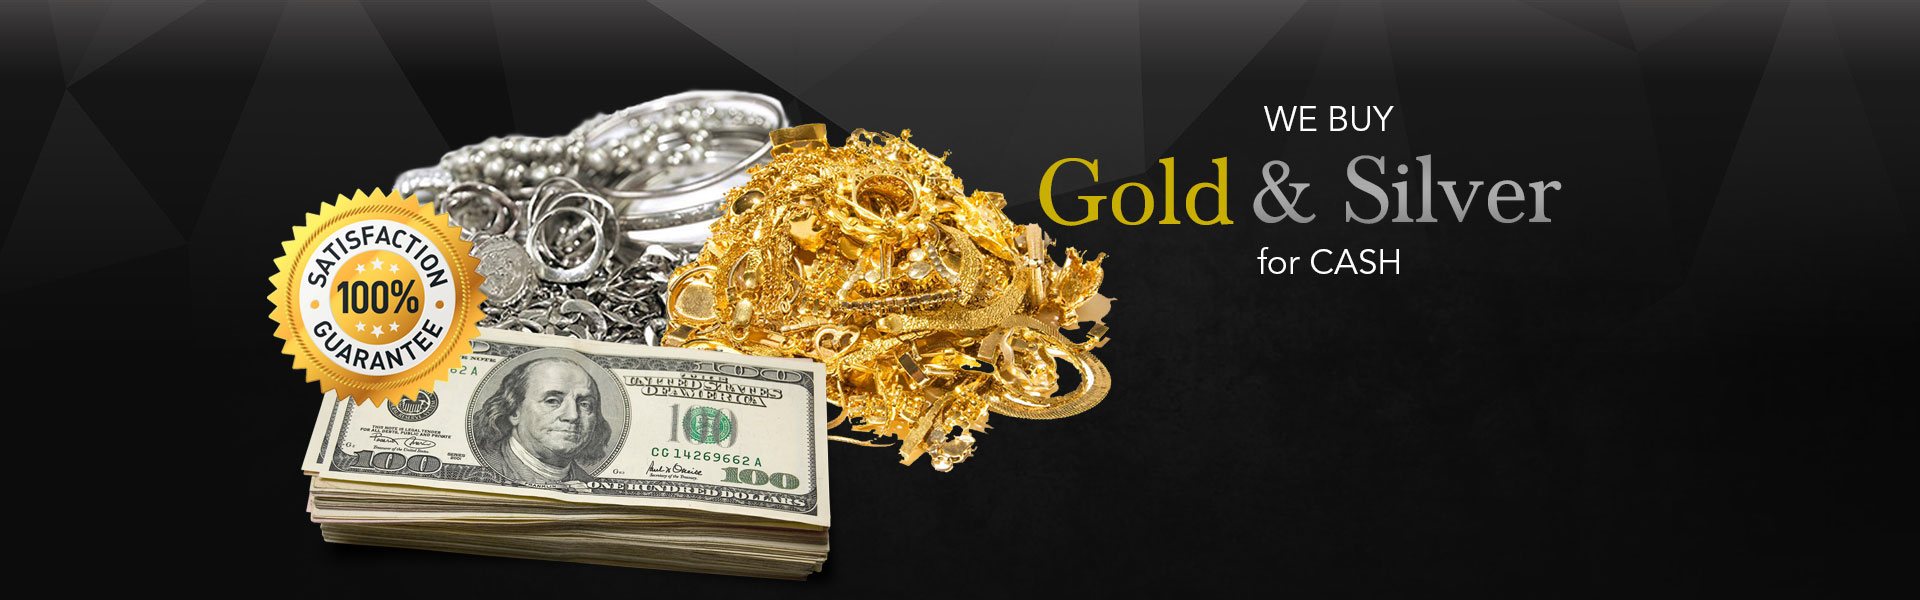 moneyworks express gold